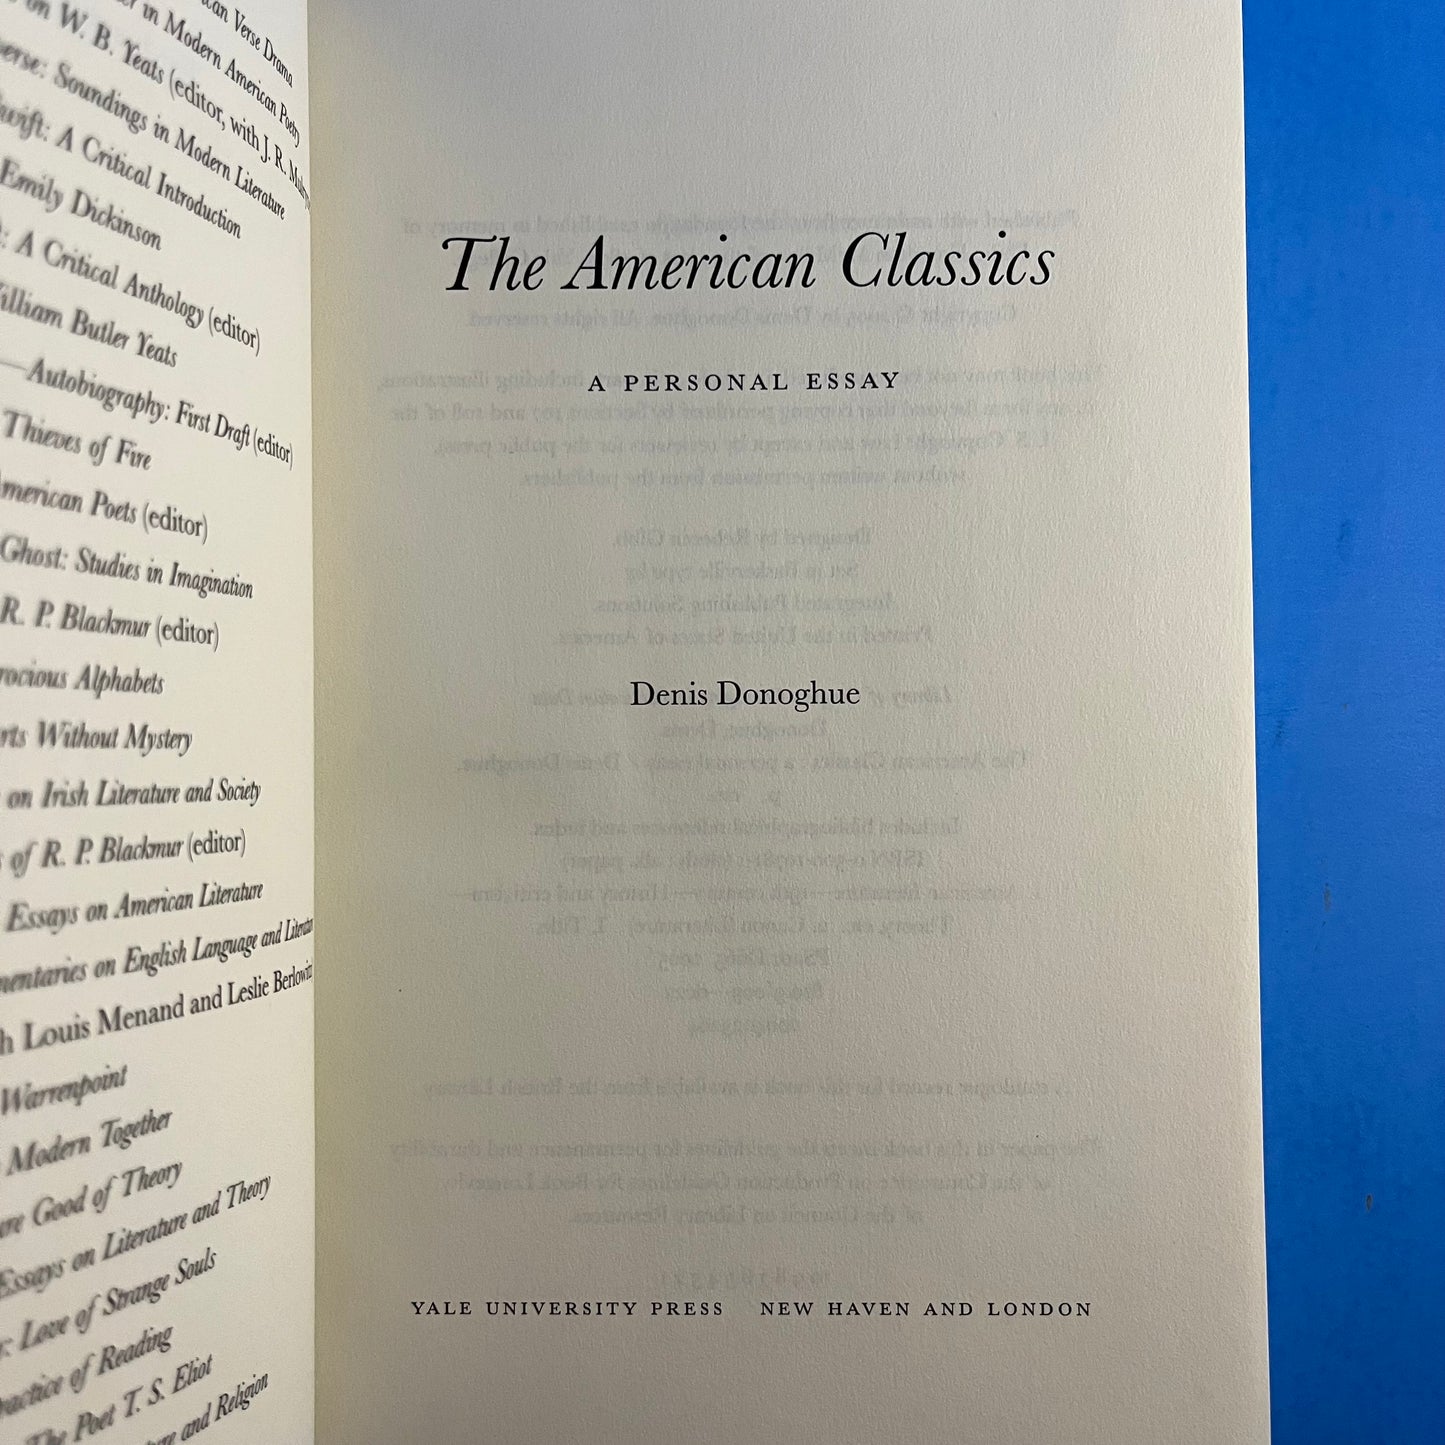 The American Classics